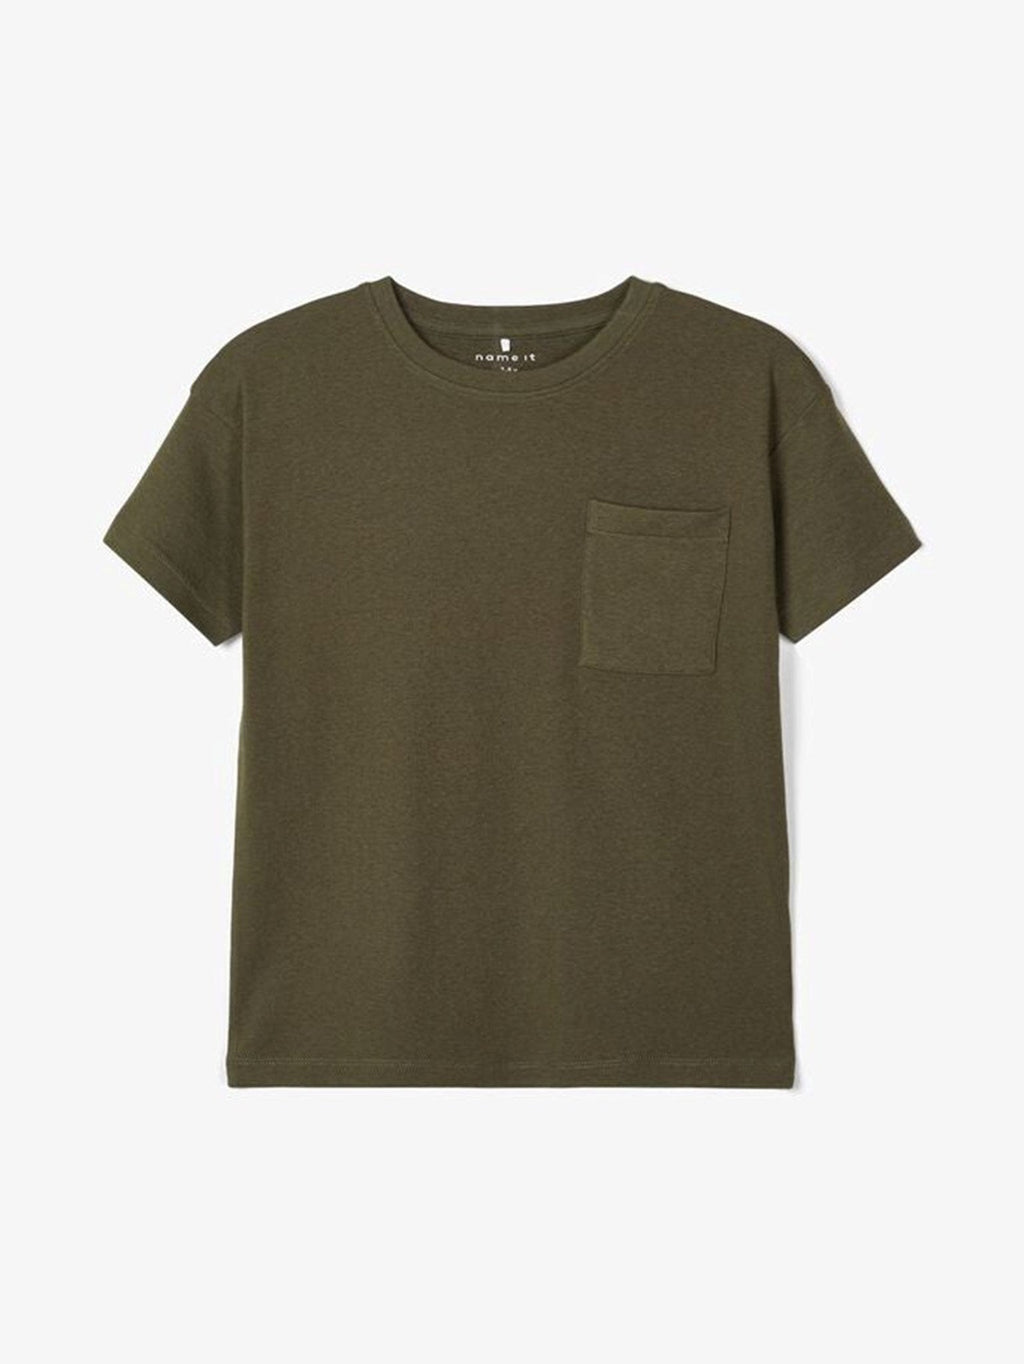 T -shirt in forma libera - verde scuro